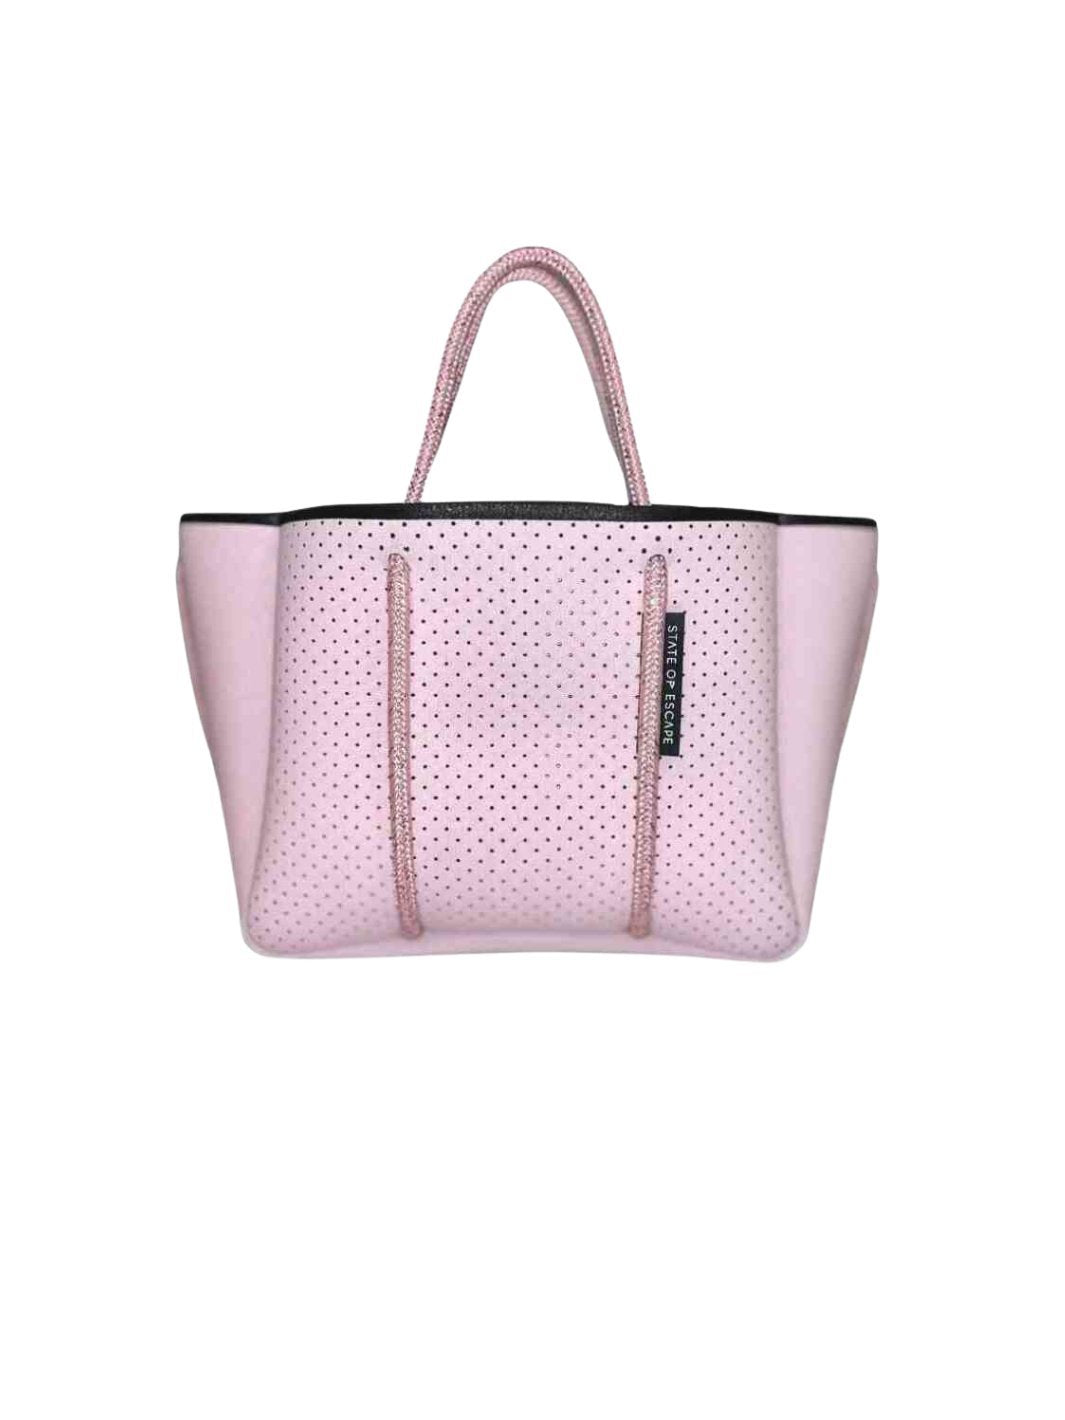 State of Escape Bags Tote bag | Petit Escape Tote Pink Mist